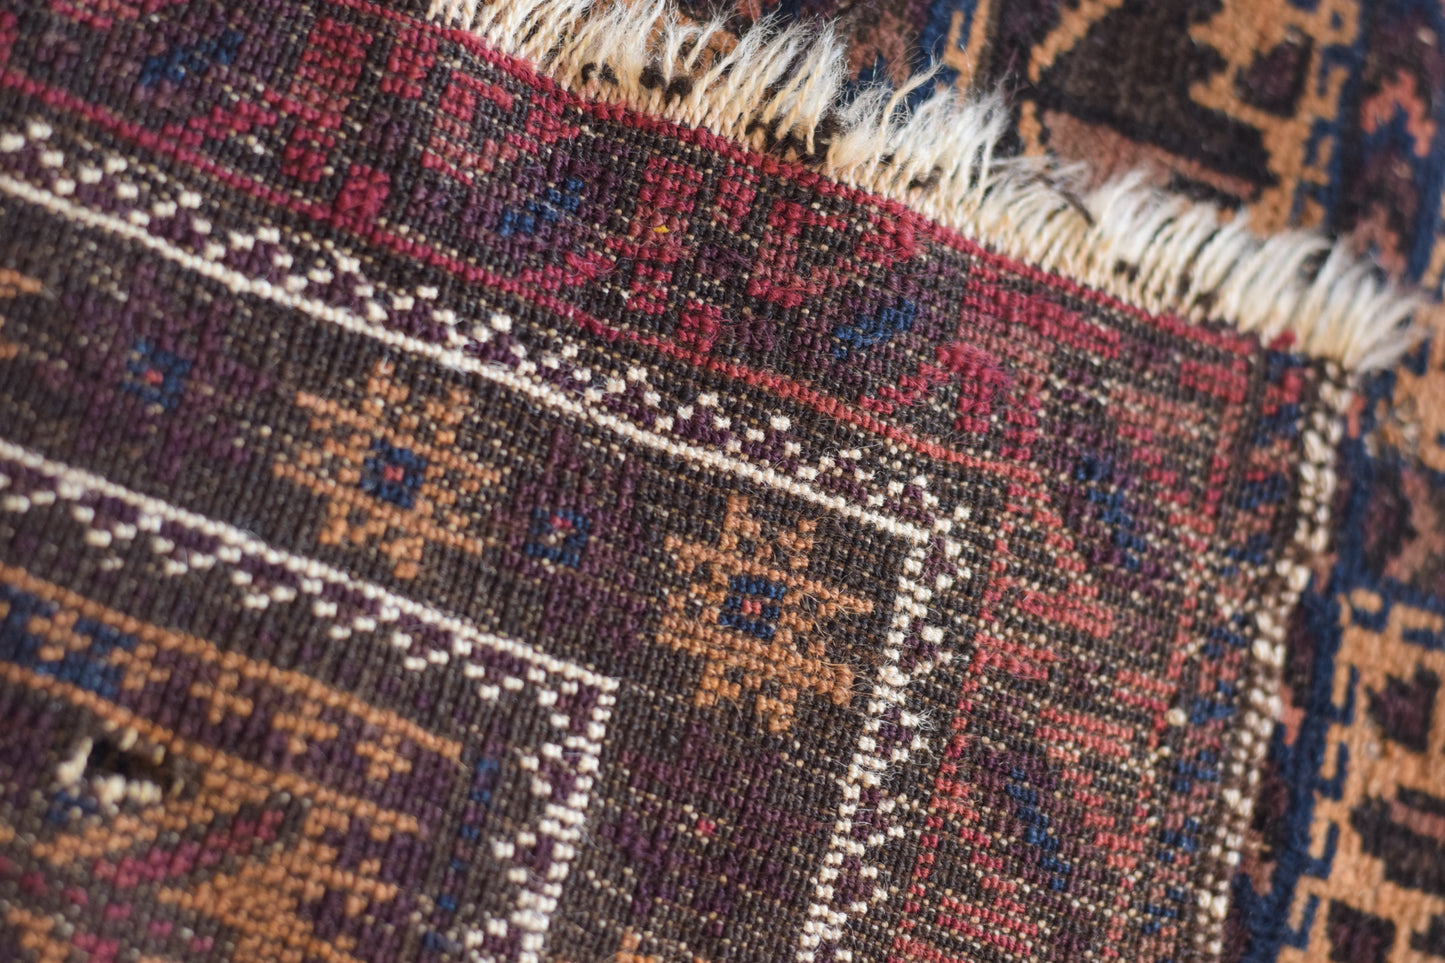 Interesting Tribal Persian Handmade Rug